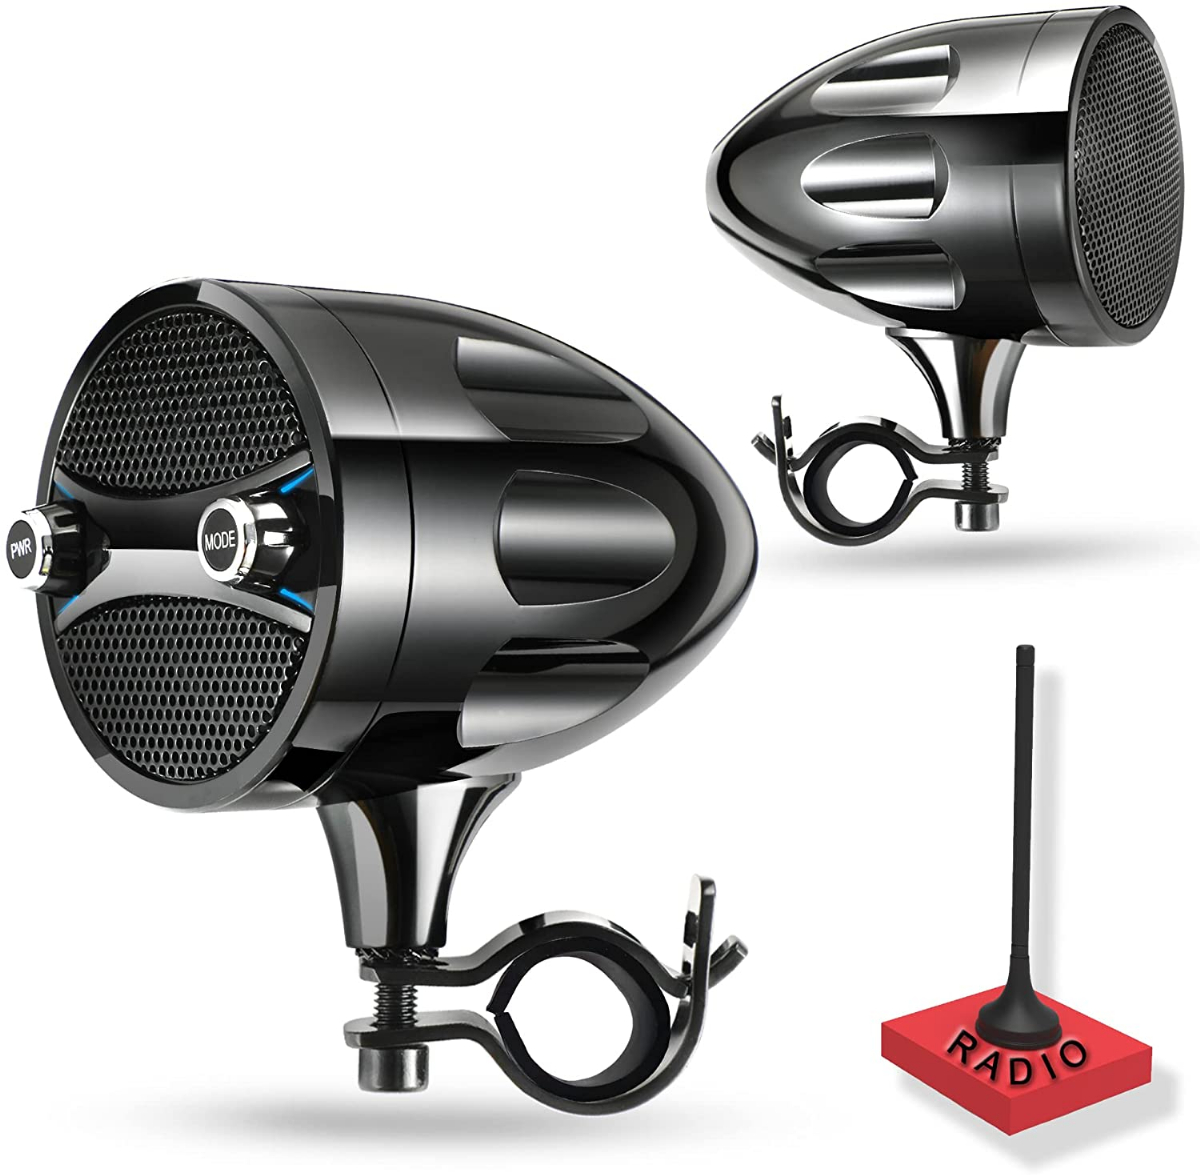 bluetooth Waterproof 4 Speaker Motorcycle Amplifier System for ATV UTV SCOOTER 